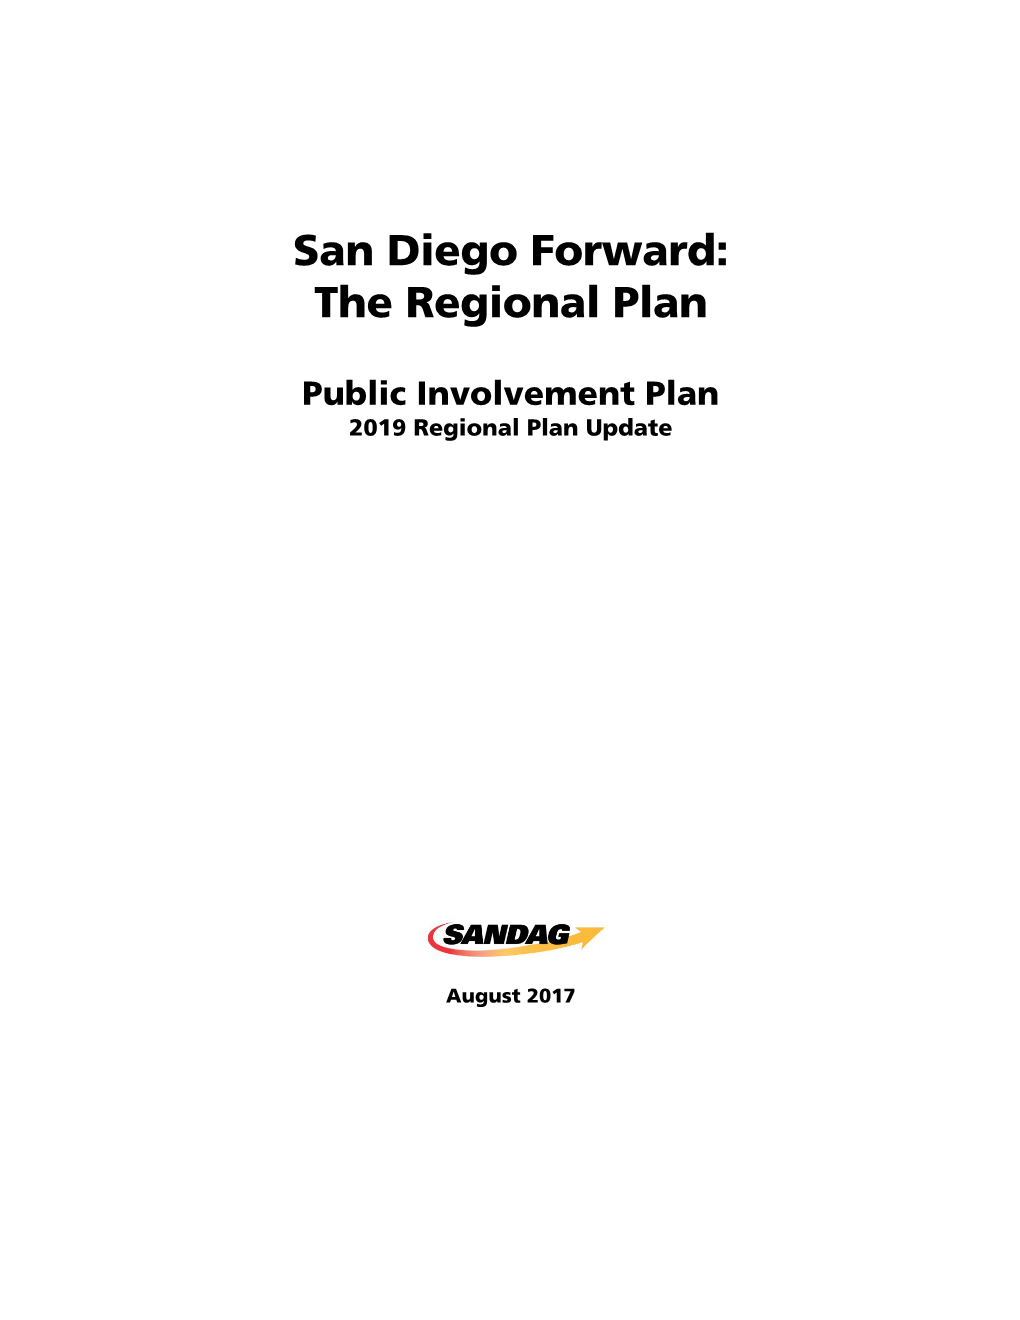 The Regional Plan